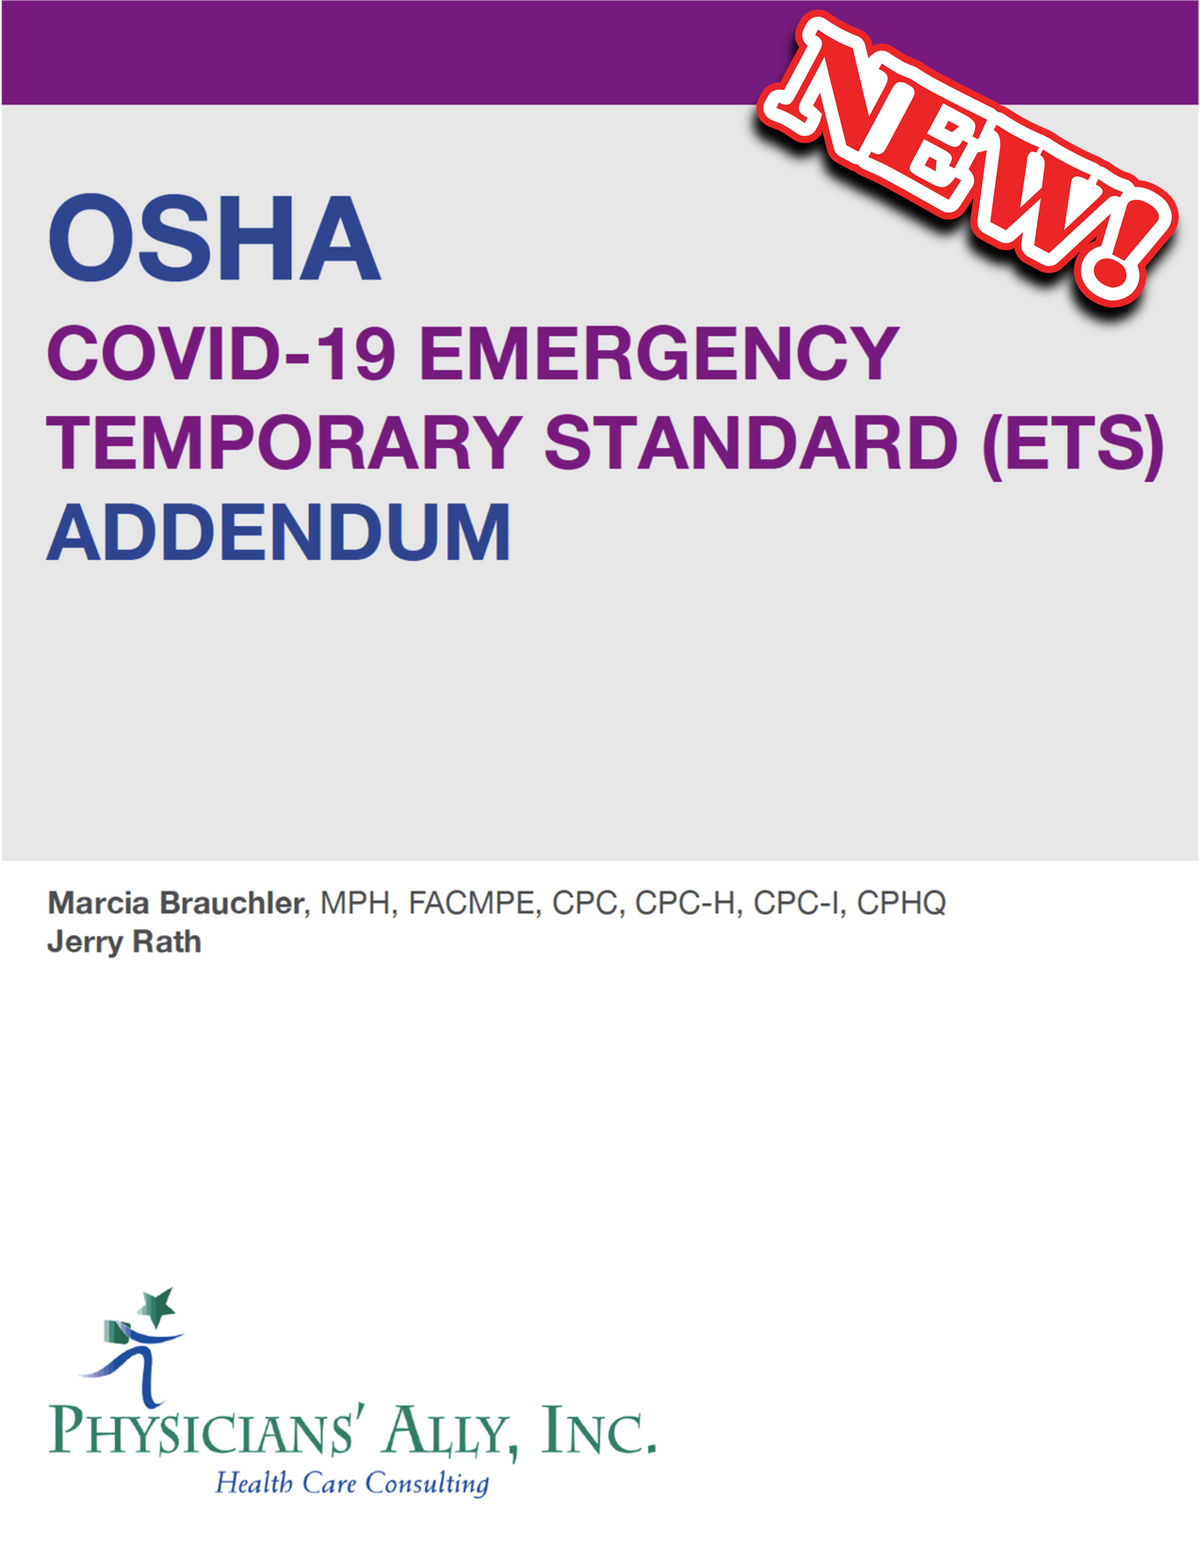 OSHA COVID-19 Emergency Temporary Standard (ETS) Addendum